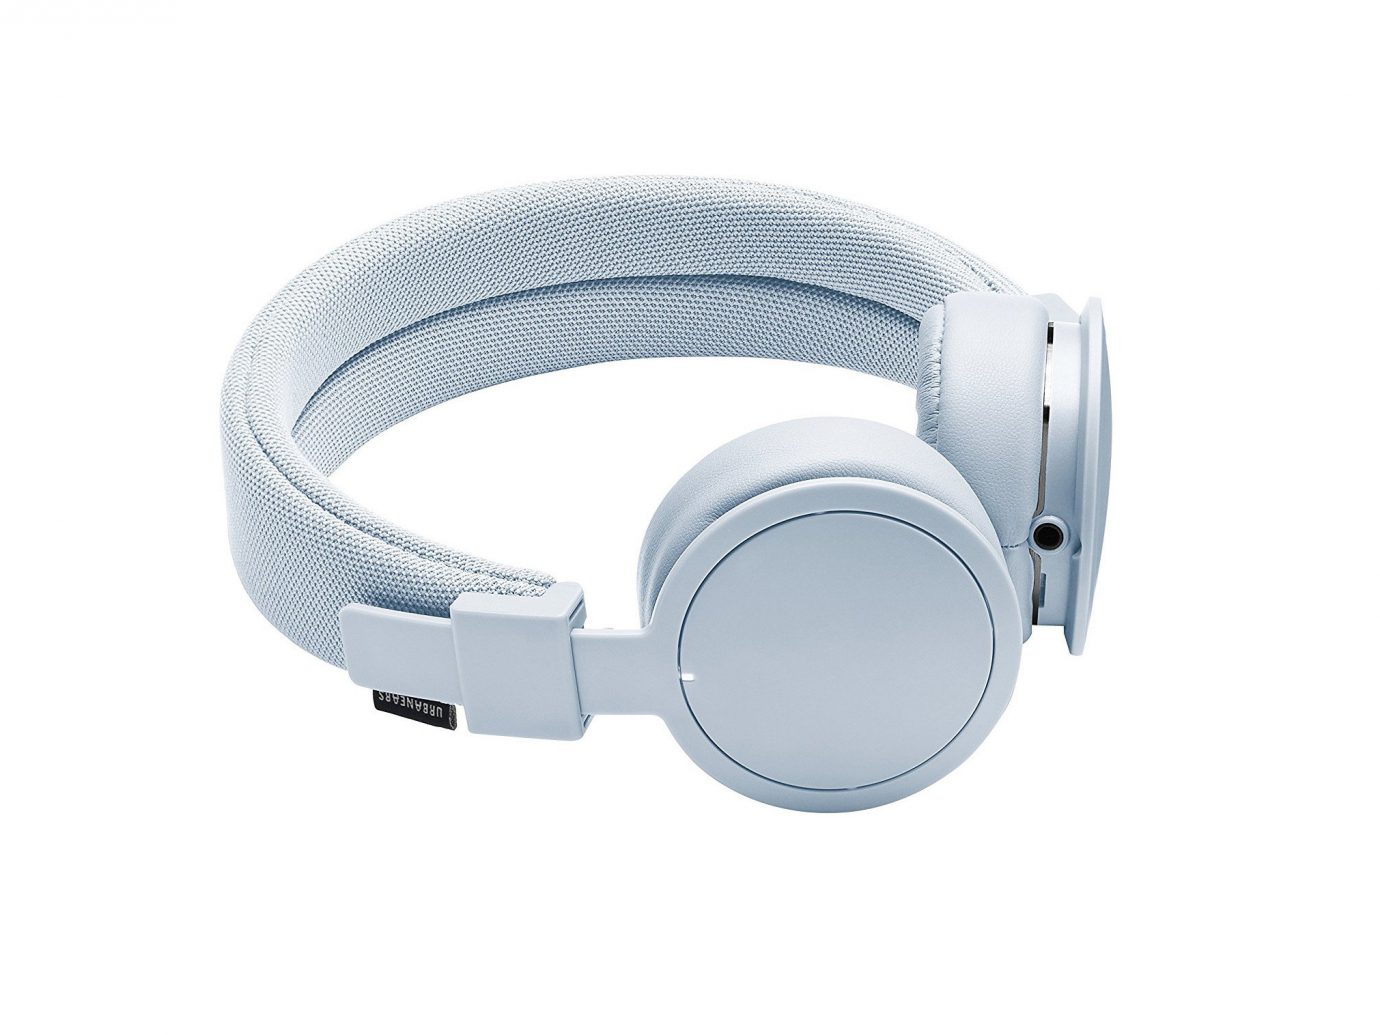 Style + Design headphones audio equipment gadget electronic device technology product audio ear